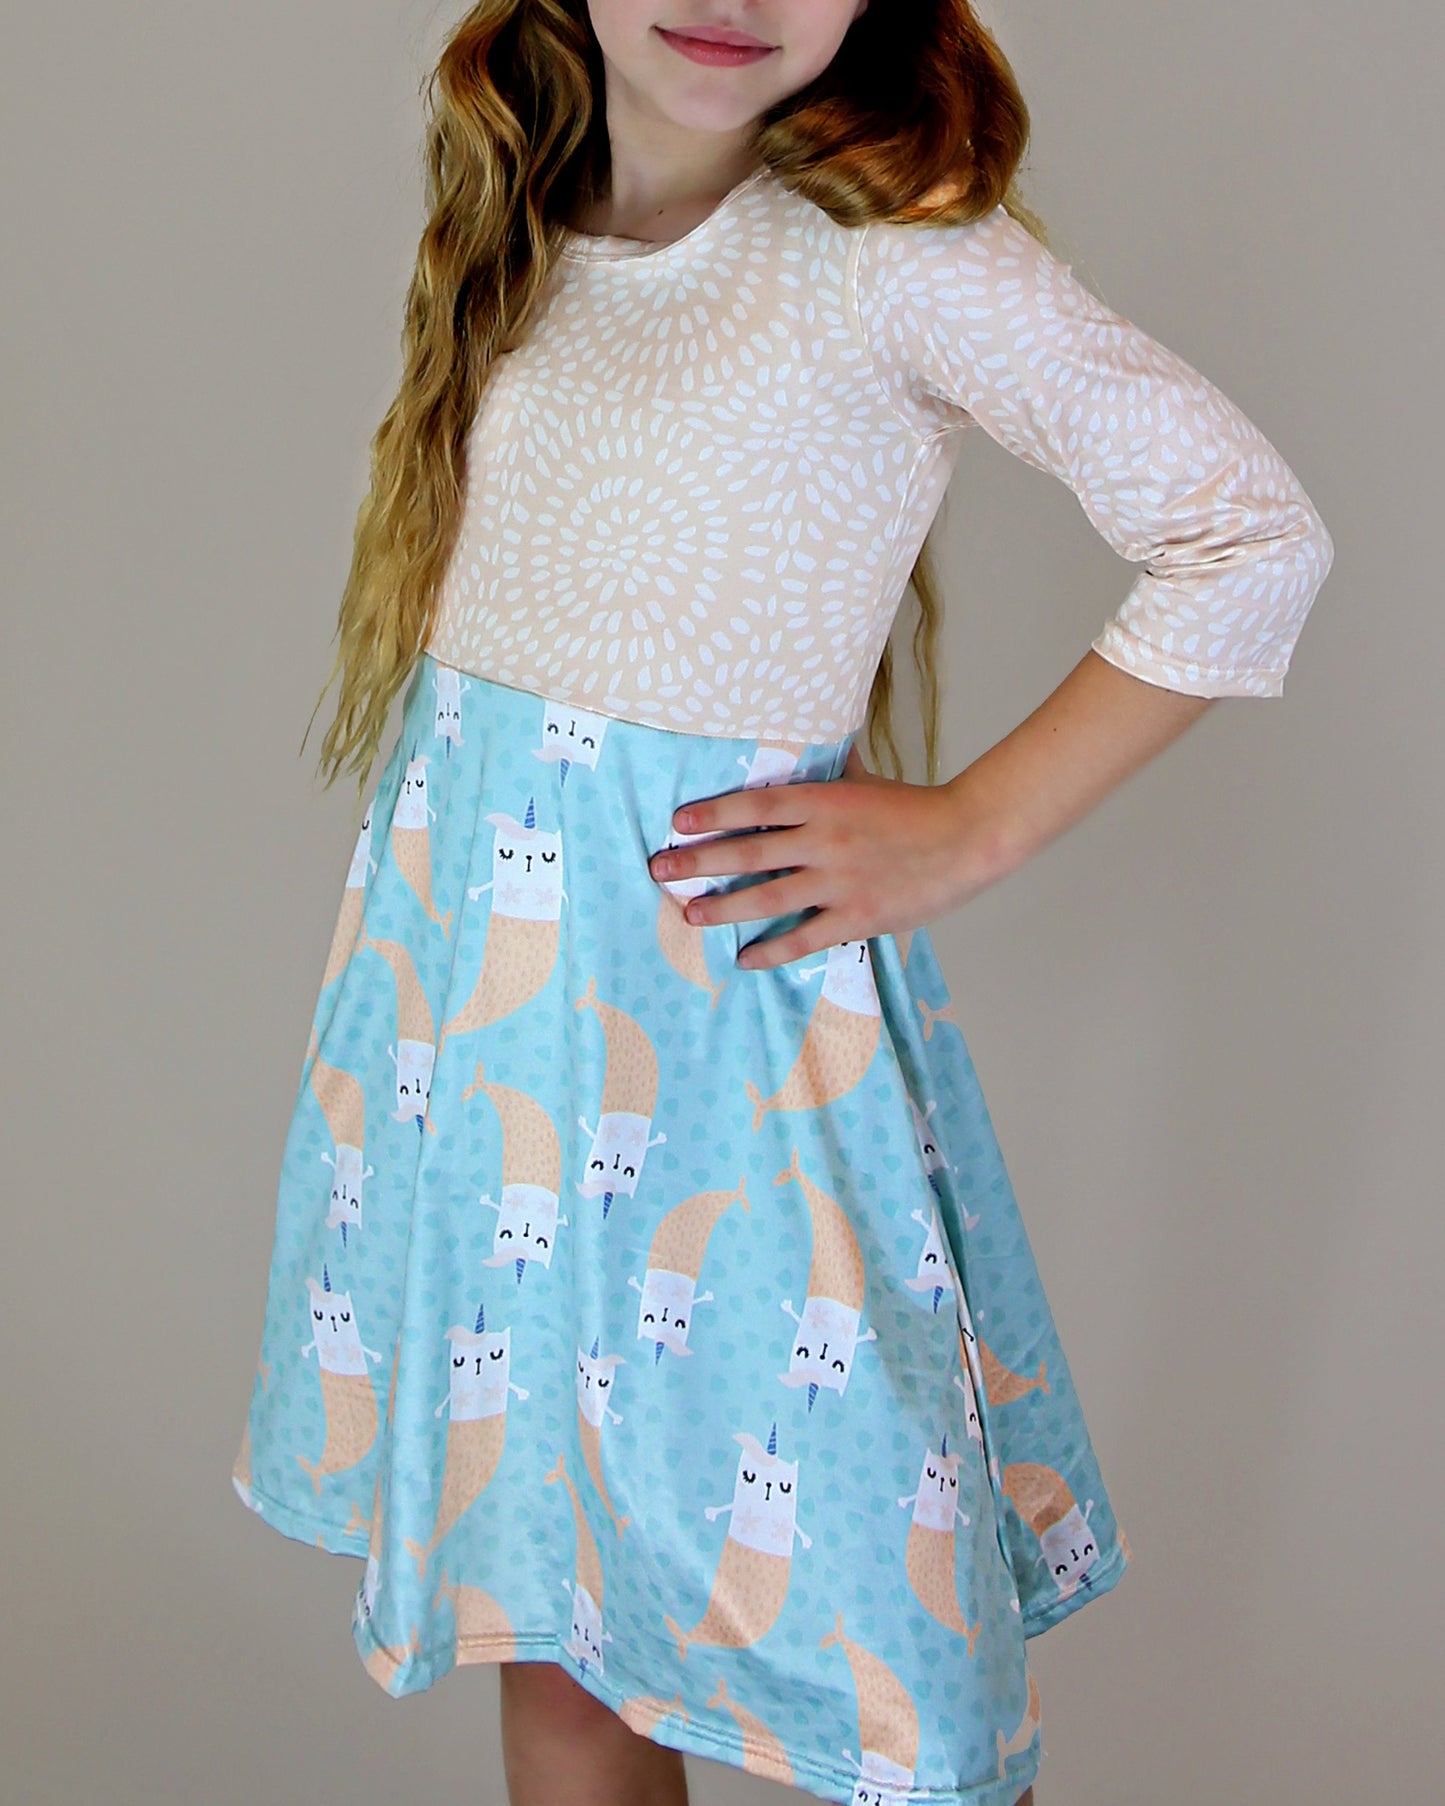 A-Line Dress - Girls Dress - Twirly Dress - Birthday Dress - Party Dress - Aqua and Peach Kitten Mermaid Dress